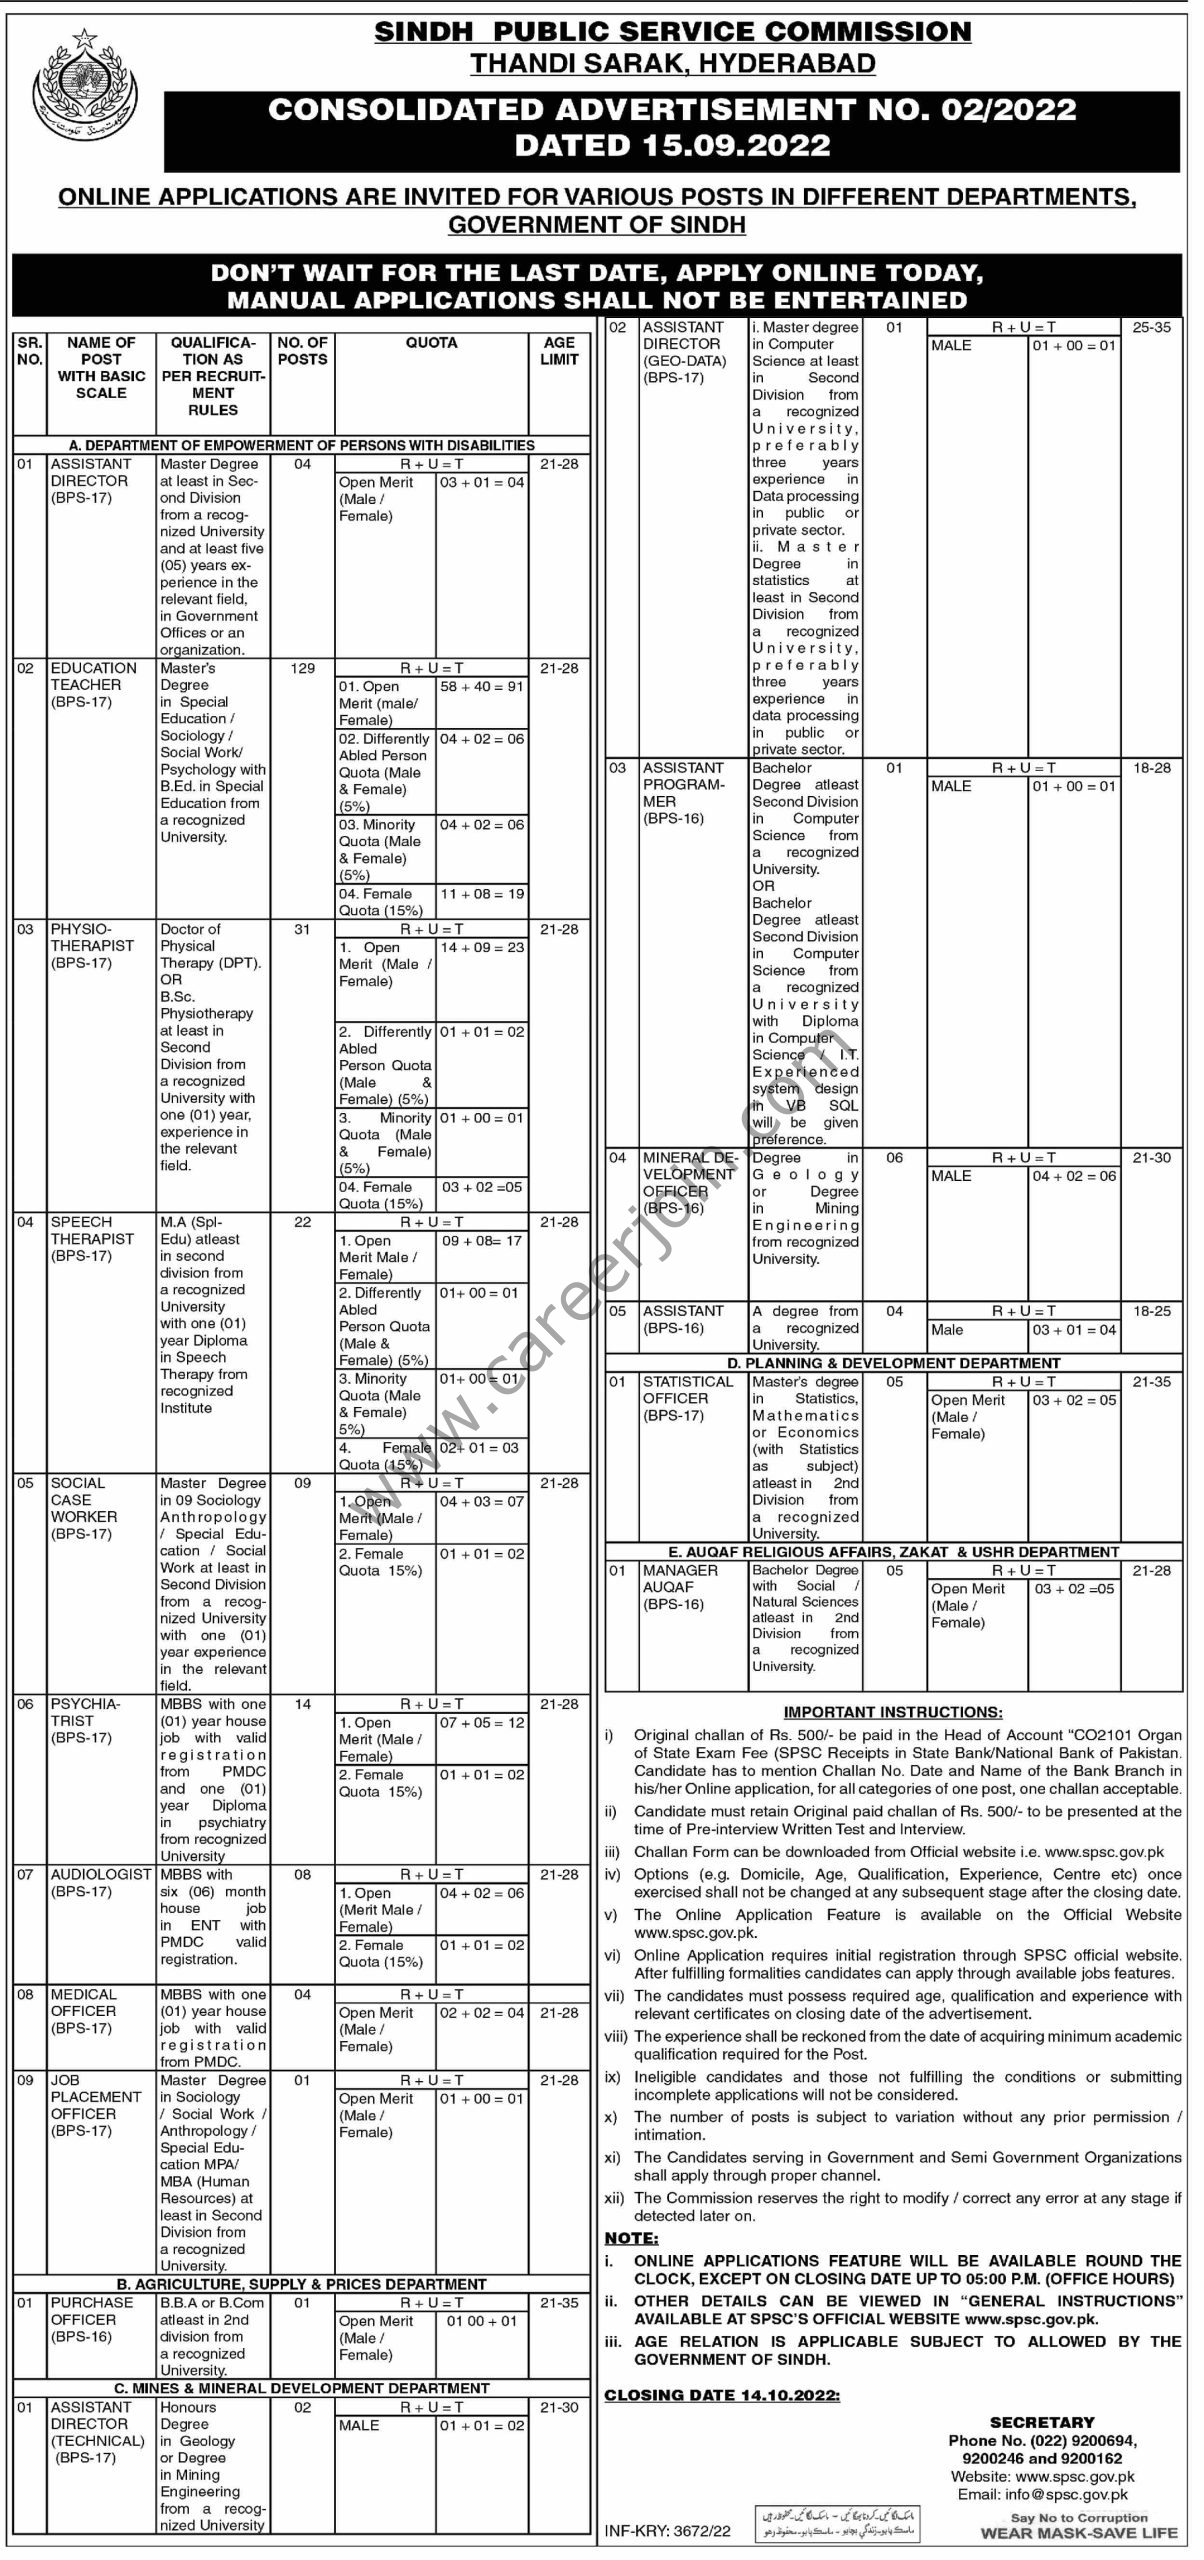 Sindh Public Service Commission SPSC Jobs 18 September 2022 Express Tribune 01